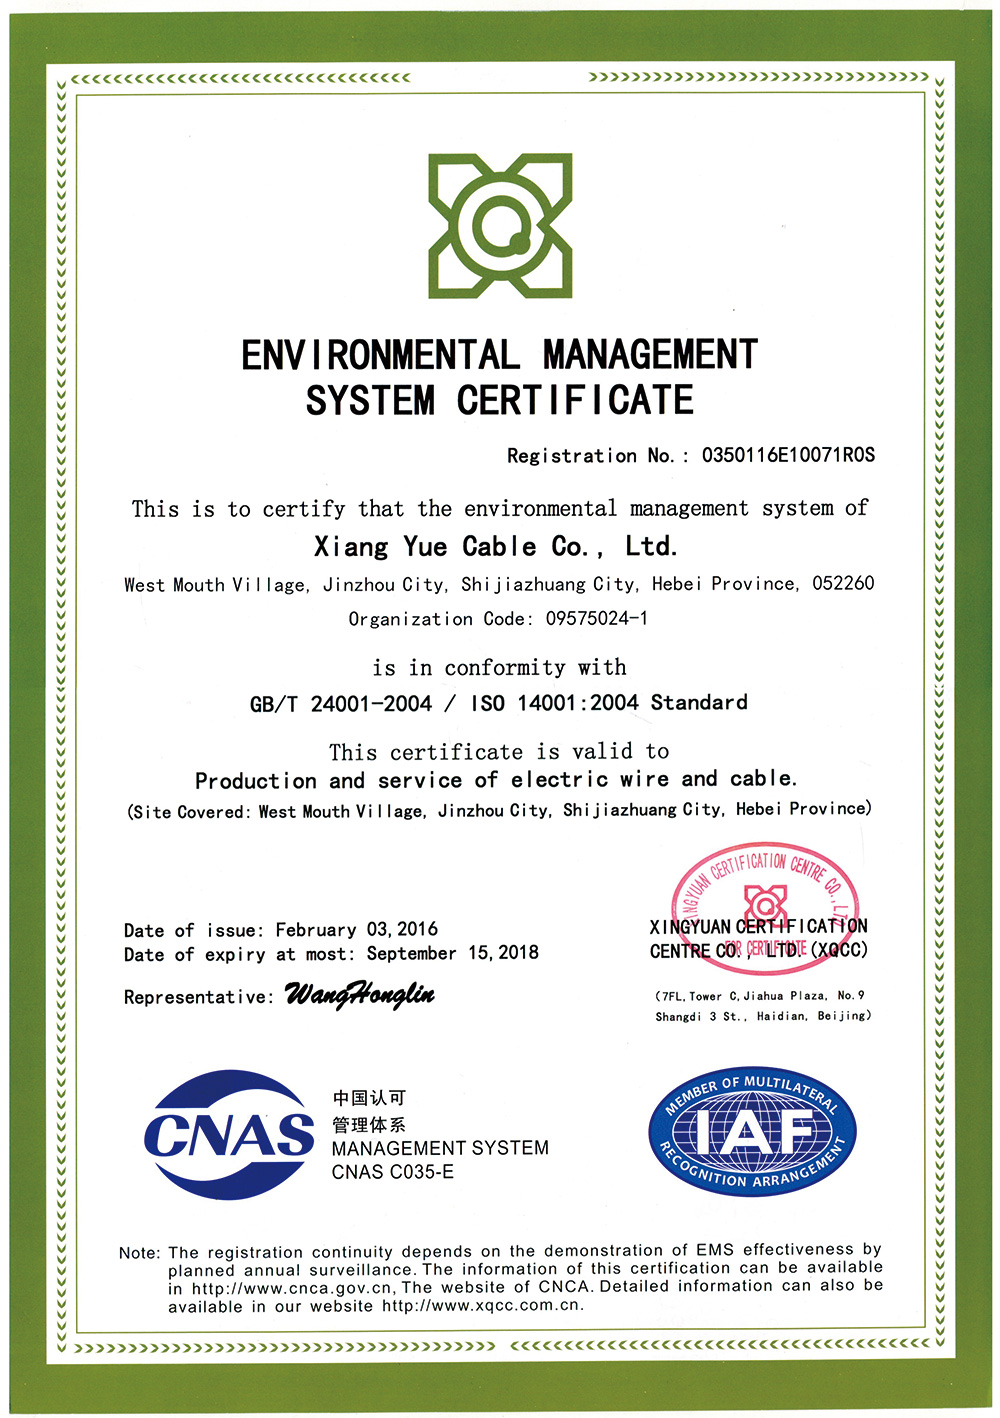 environmental-managemenet-system-certificate